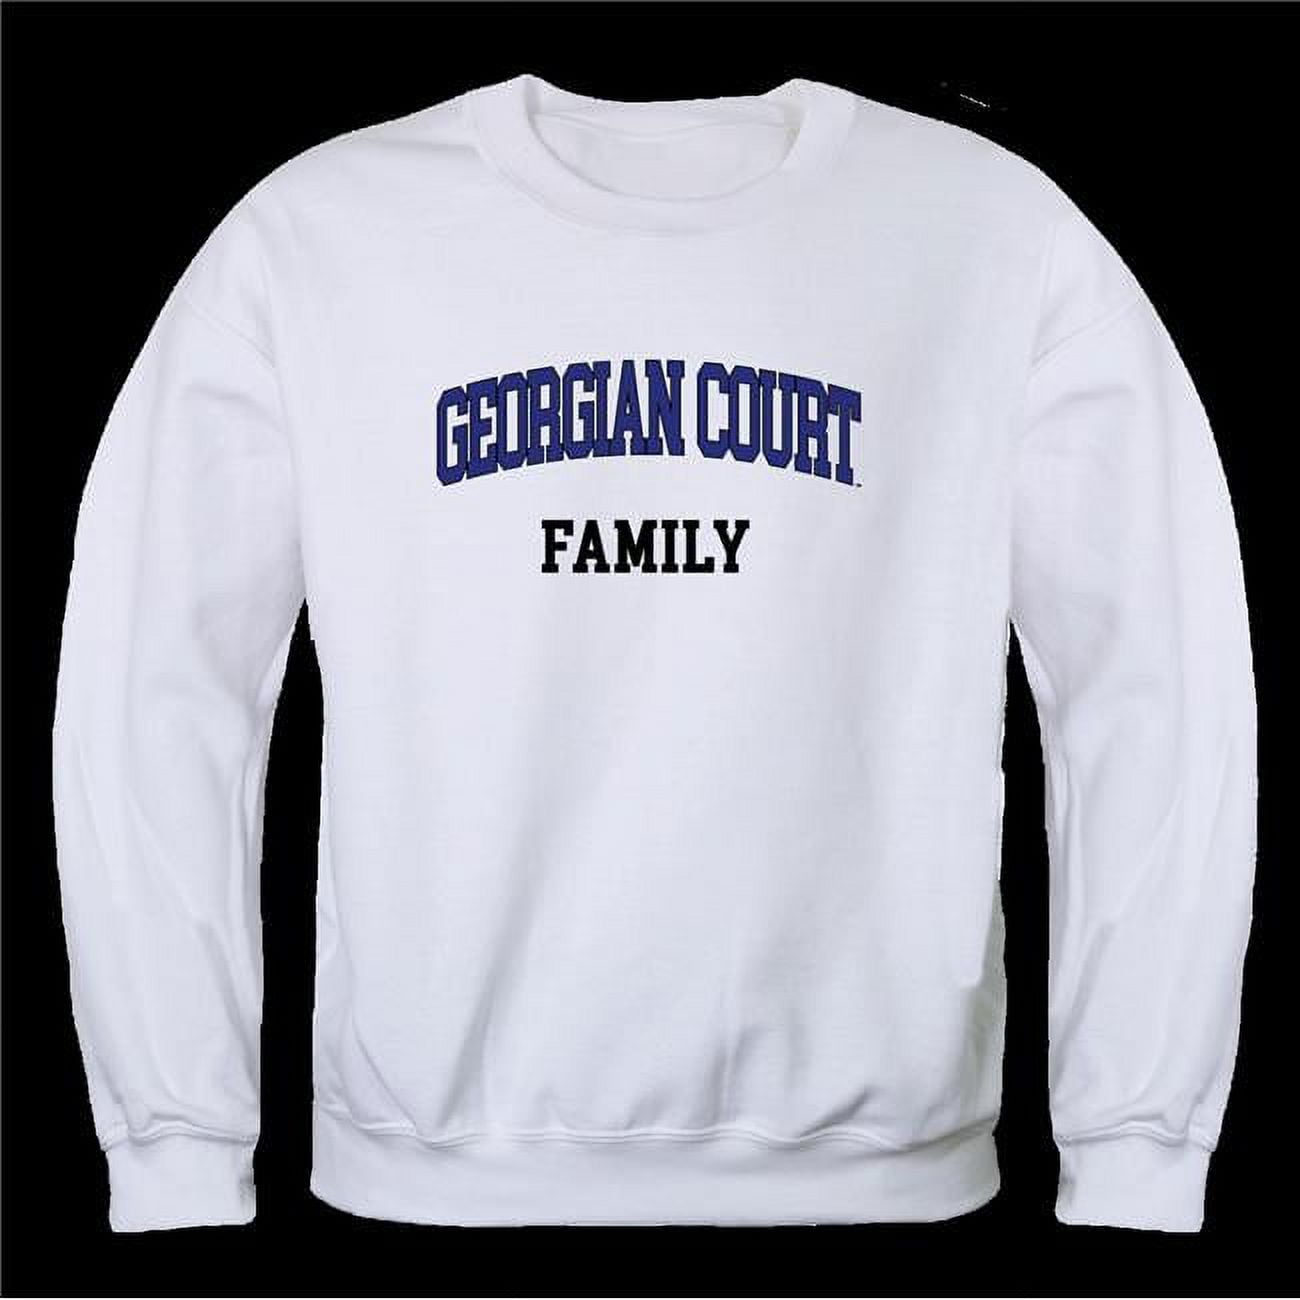 W Republic 572-123-WHT-02 University of Houston Cougars Family Crewneck  Sweatshirt, White - Medium 